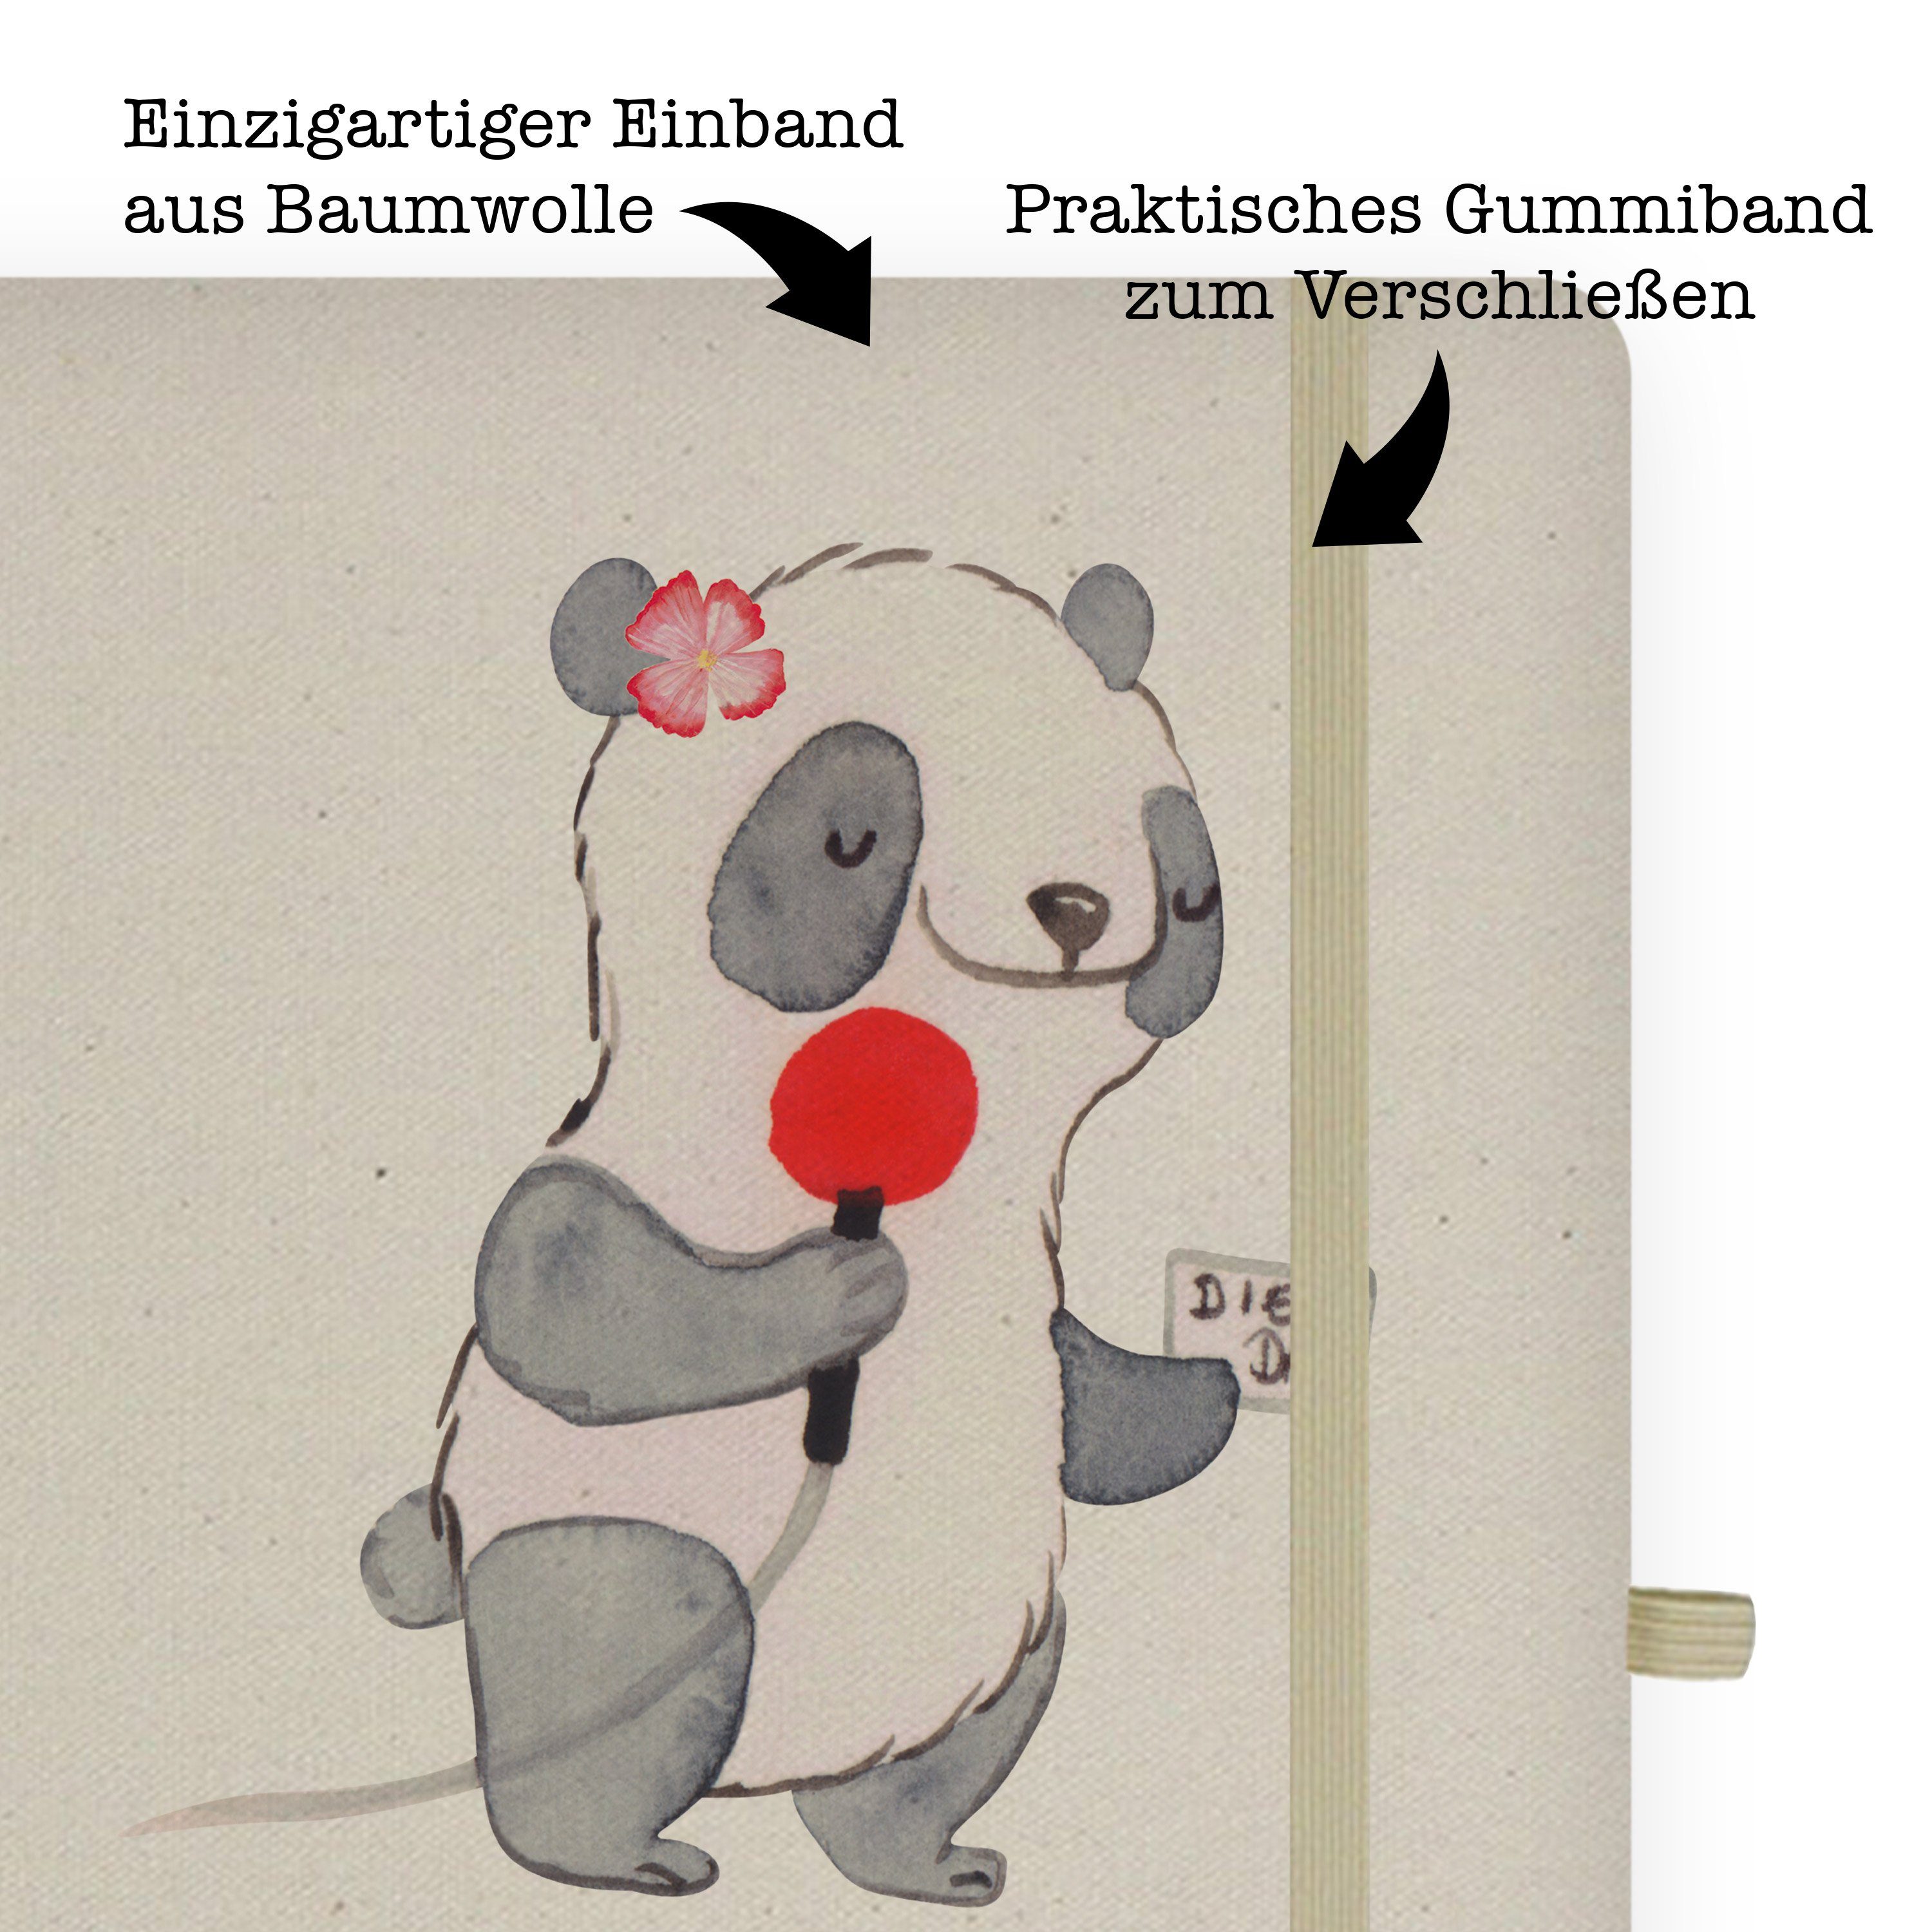 Mr. & Mrs. Panda Notizbuch & Journal, Mr. Panda - Pressesprecherin Mrs. Herz - mit Geschenk, Transparent Notizen